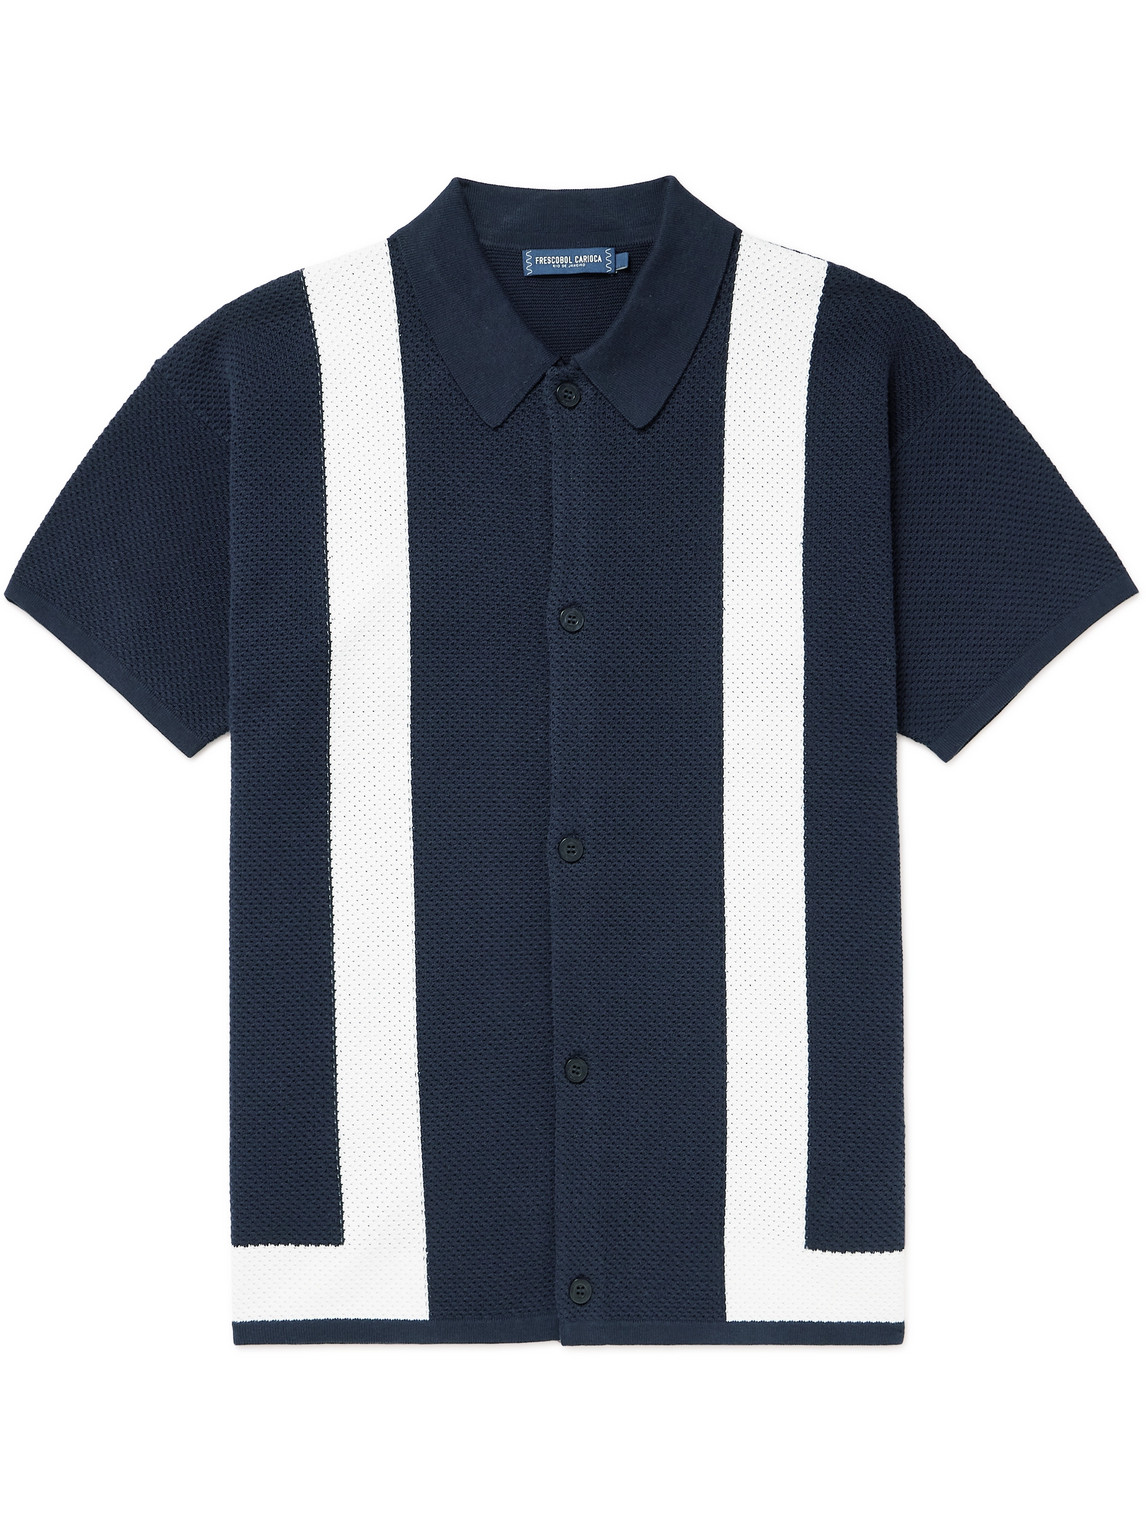 Frescobol Carioca - Barretos Striped Knitted Cotton Shirt - Men - Blue - XL von Frescobol Carioca